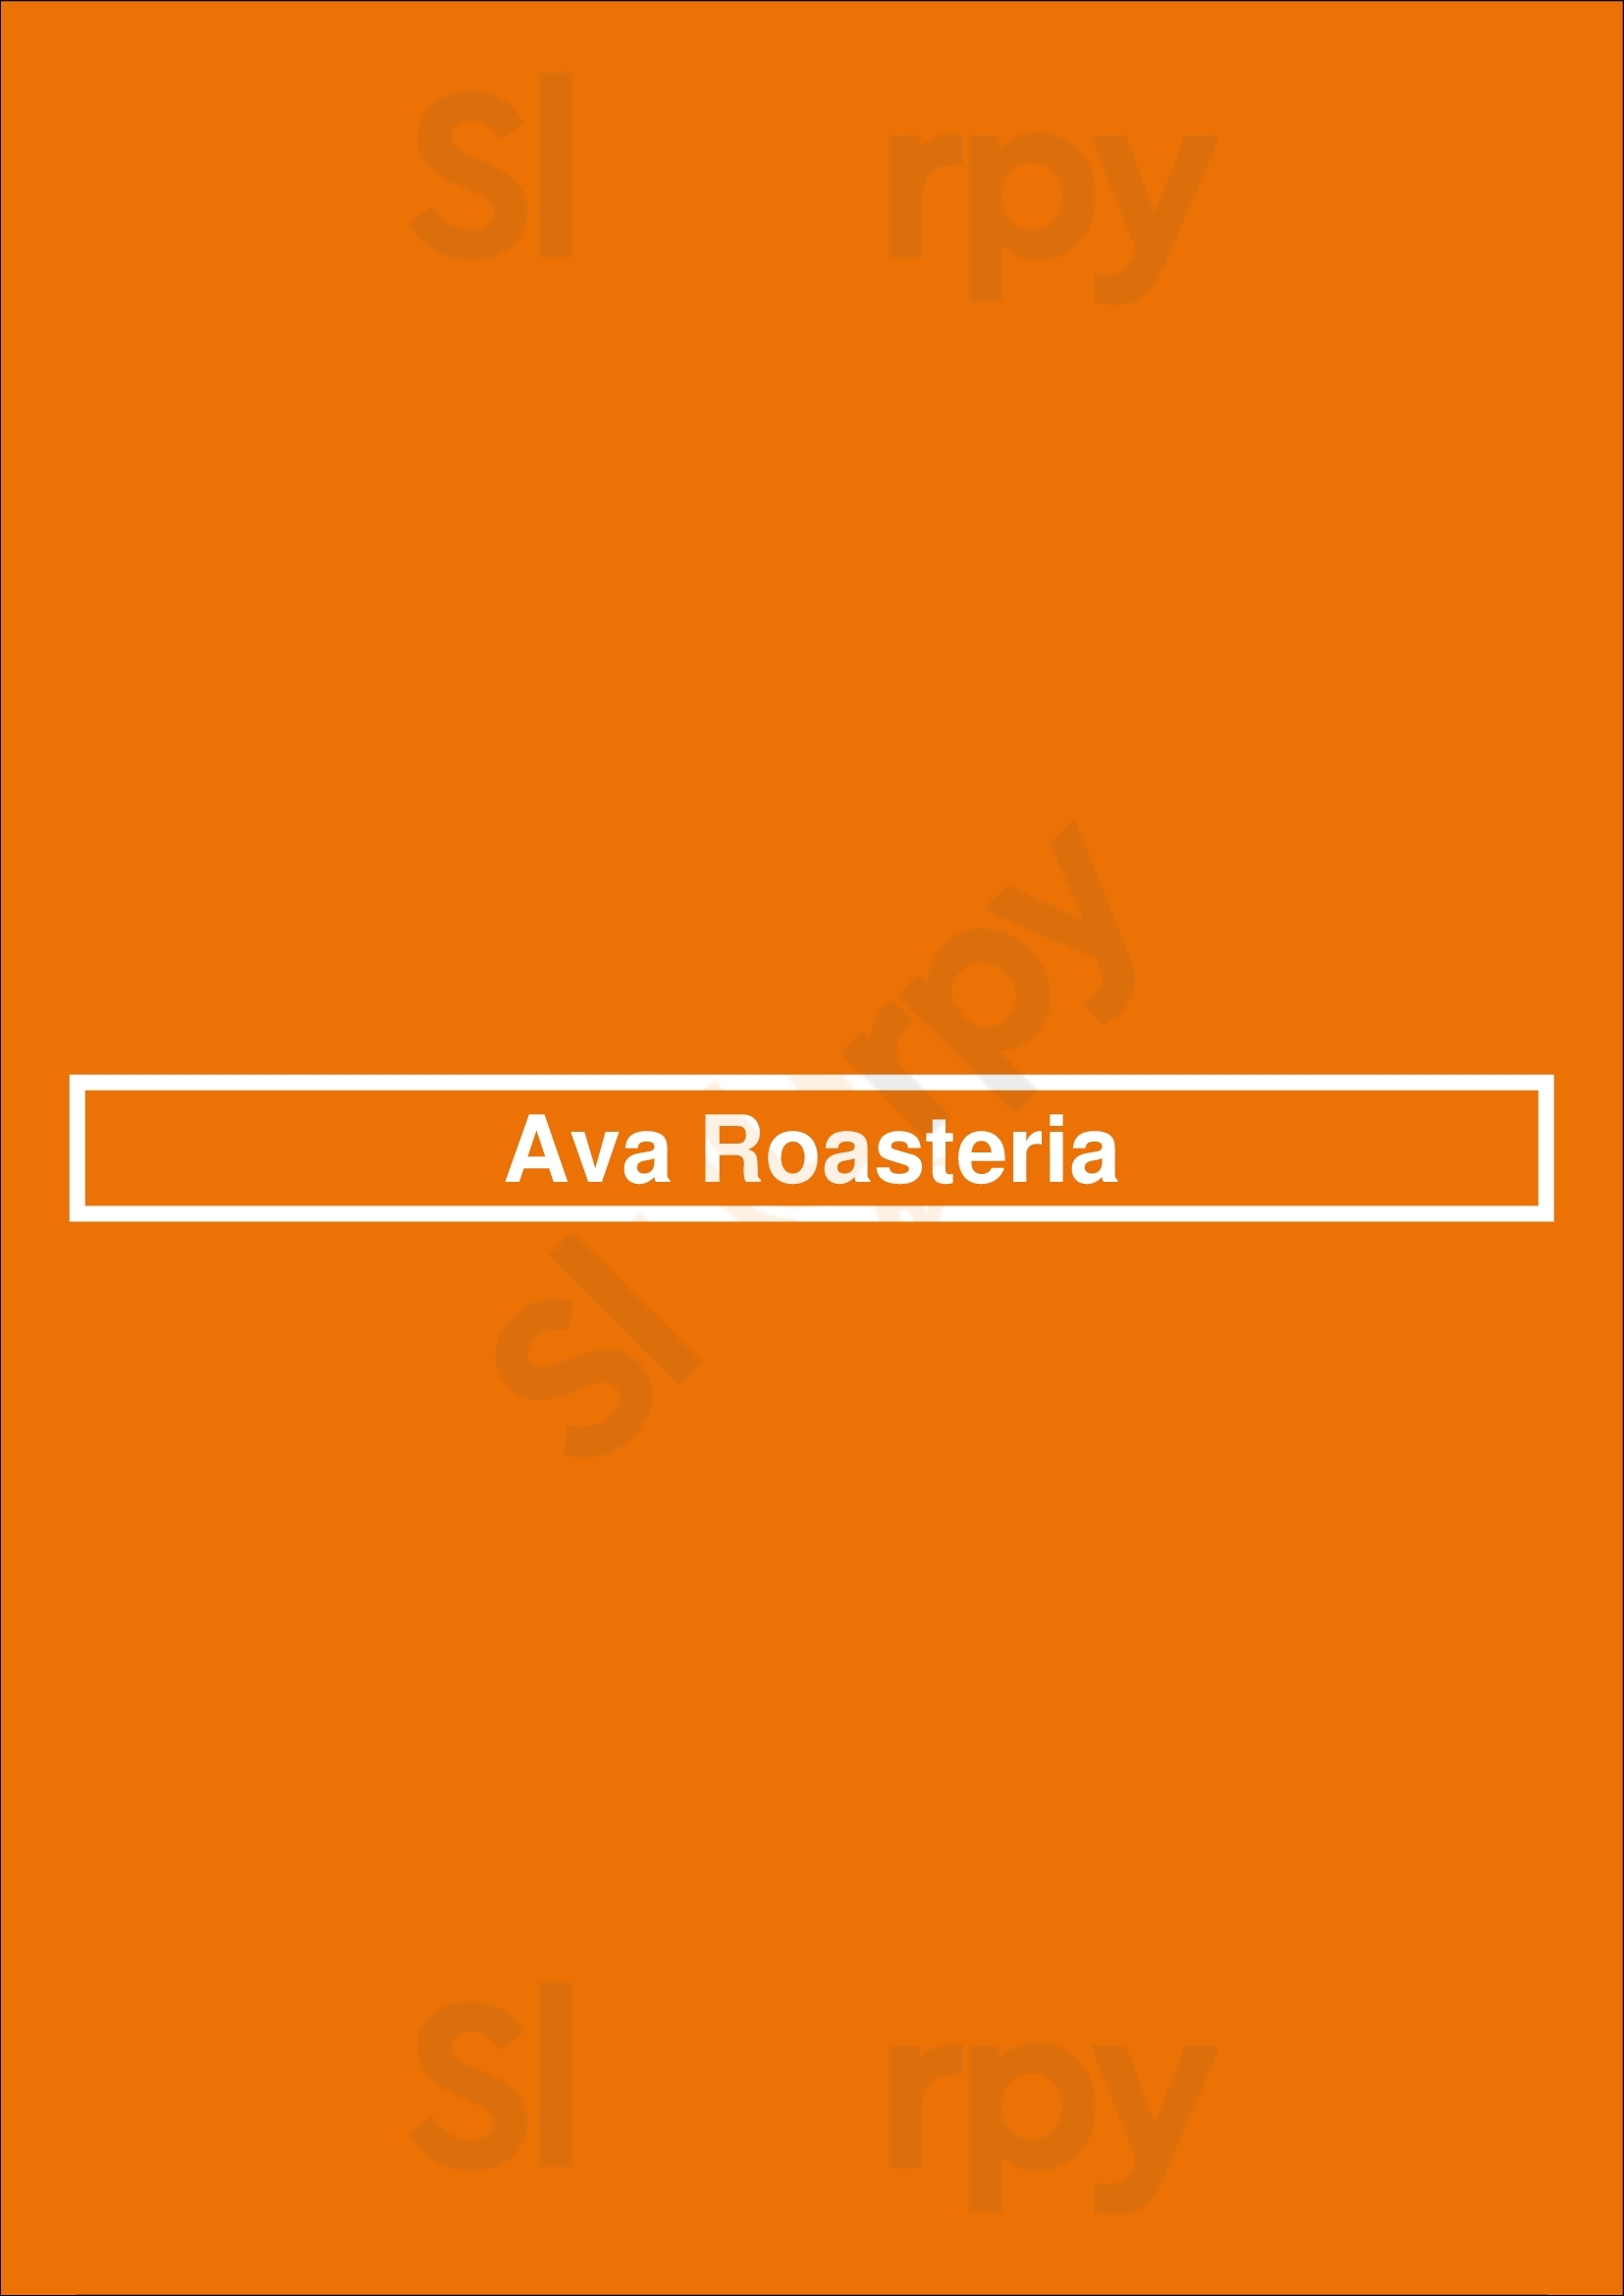 Ava Roasteria Portland Menu - 1